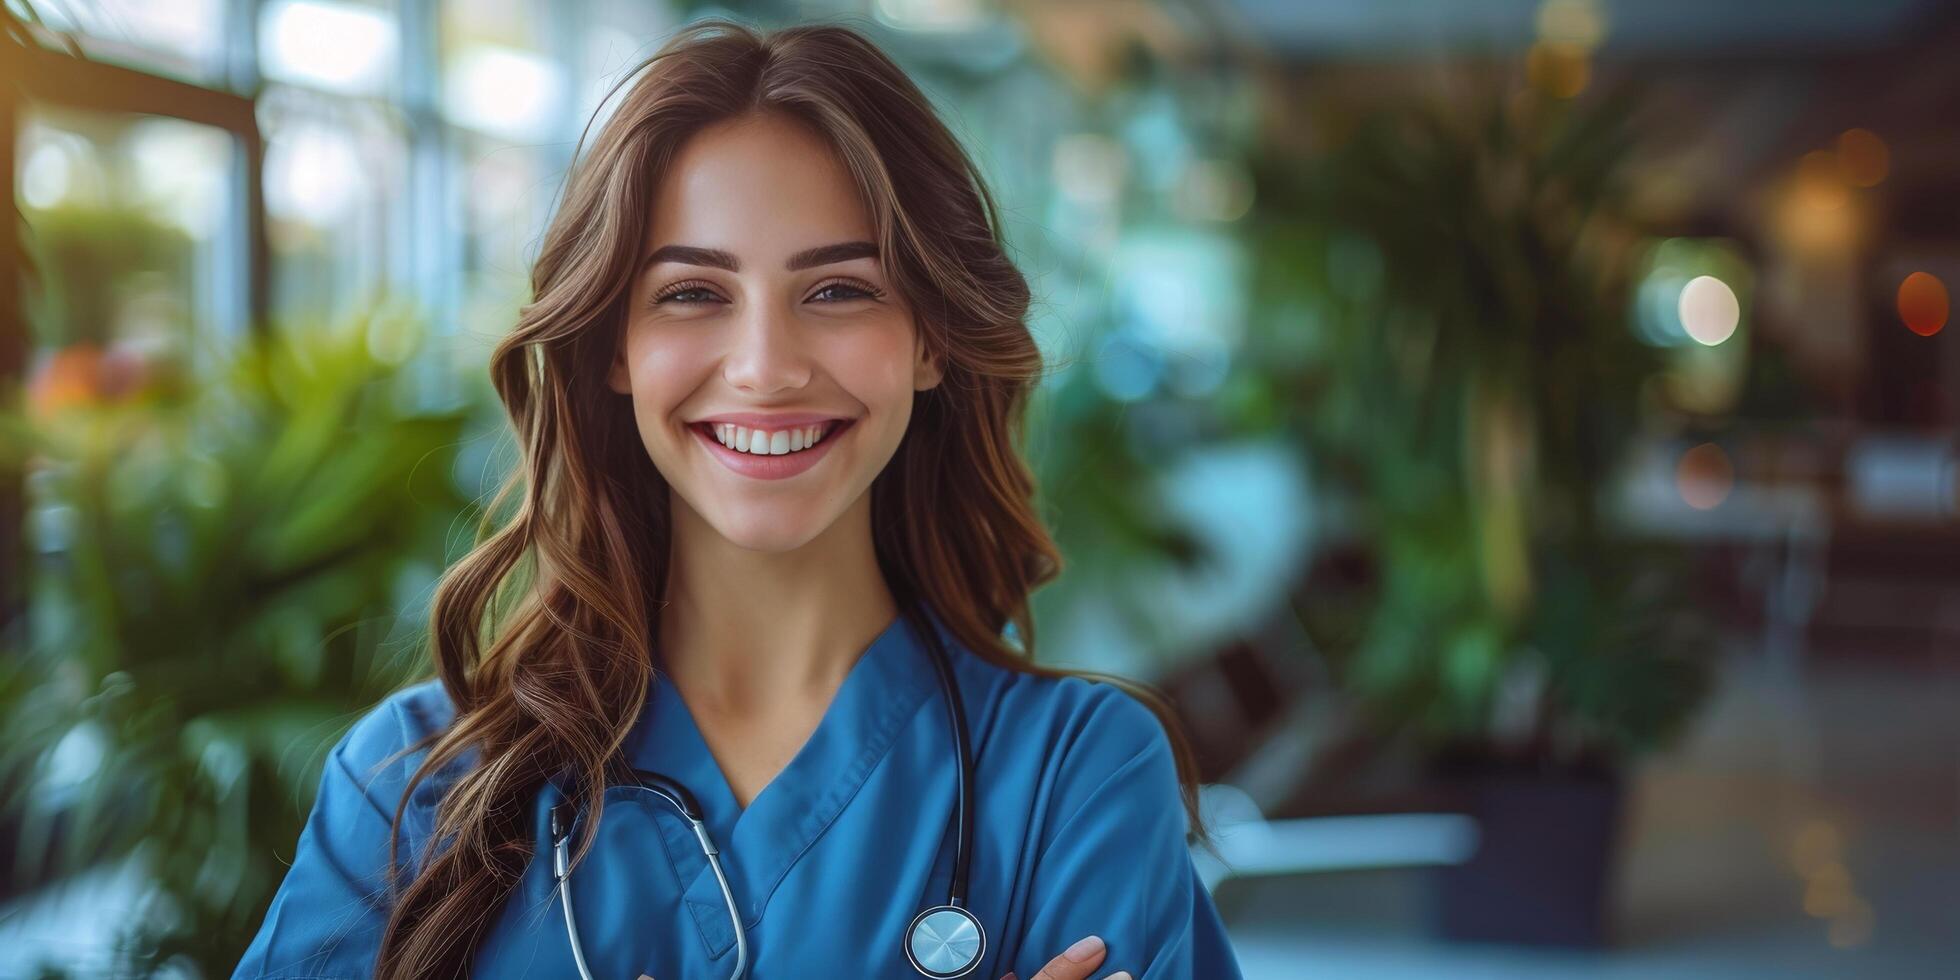 ai gegenereerd glimlachen vrouw in blauw schrobben pak met stethoscoop foto